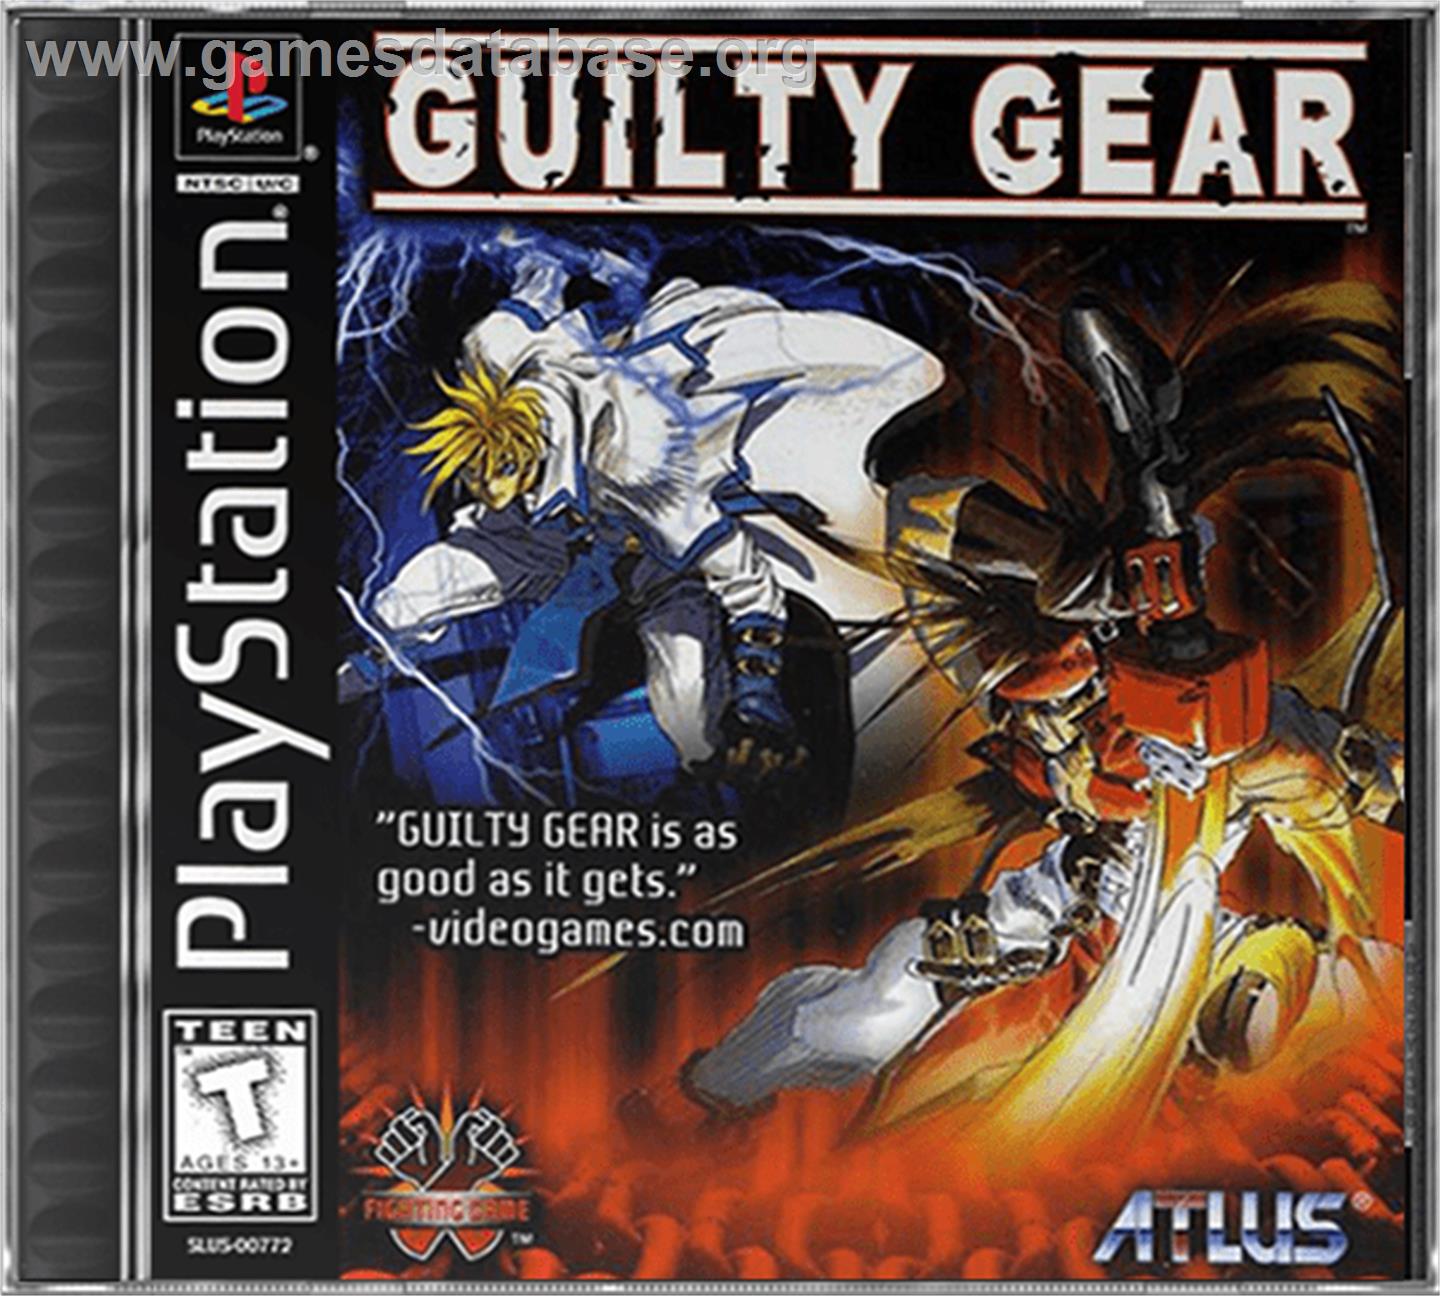 Guilty Gear - Sony Playstation - Artwork - Box